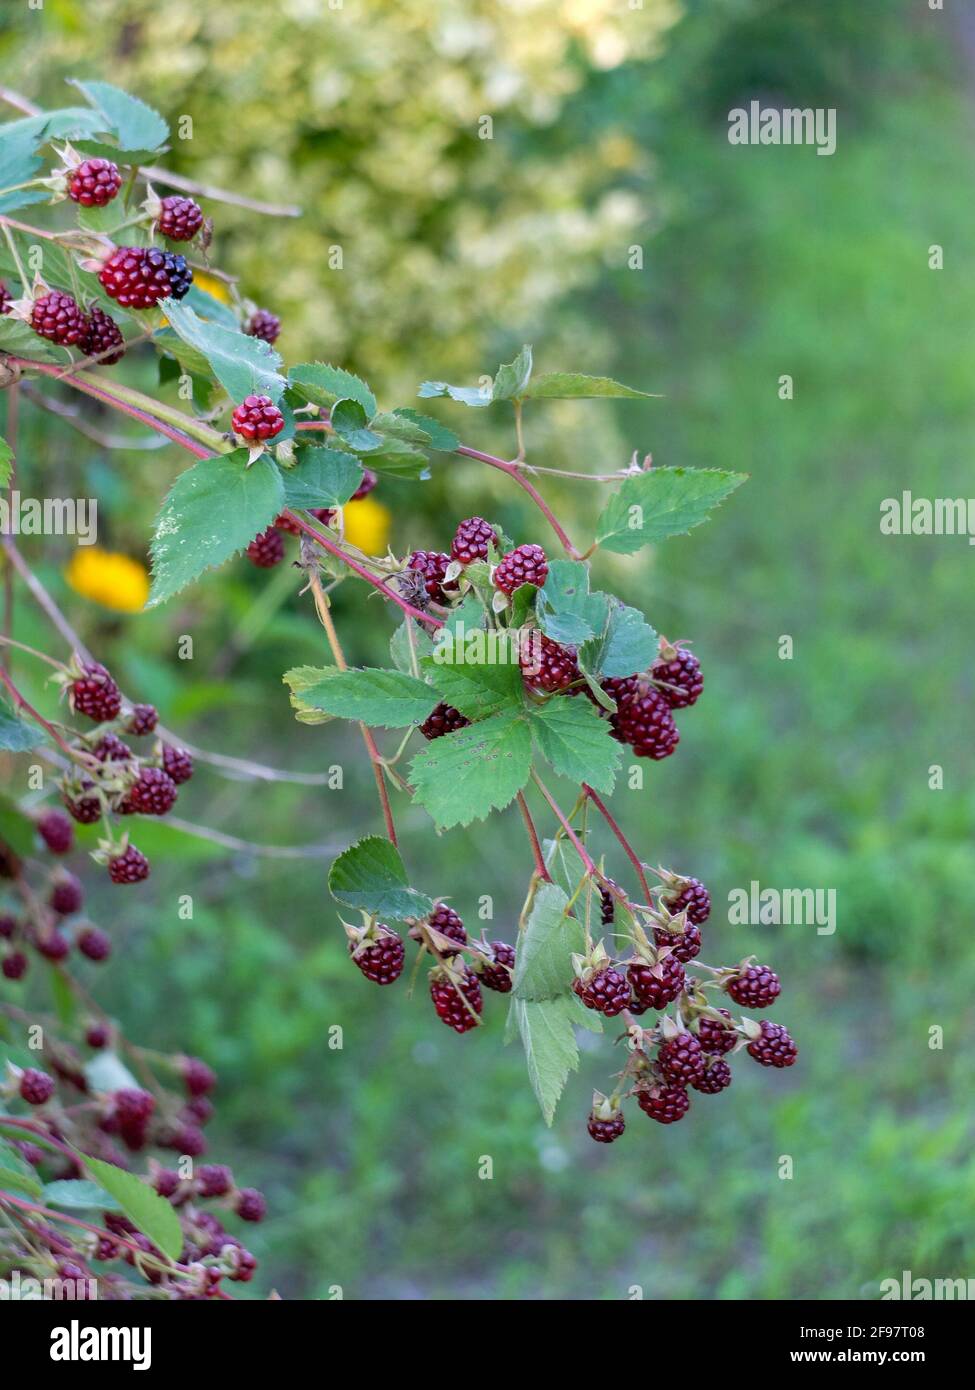 Filiale BlackBerry (Robus sect.Rubus) Foto Stock